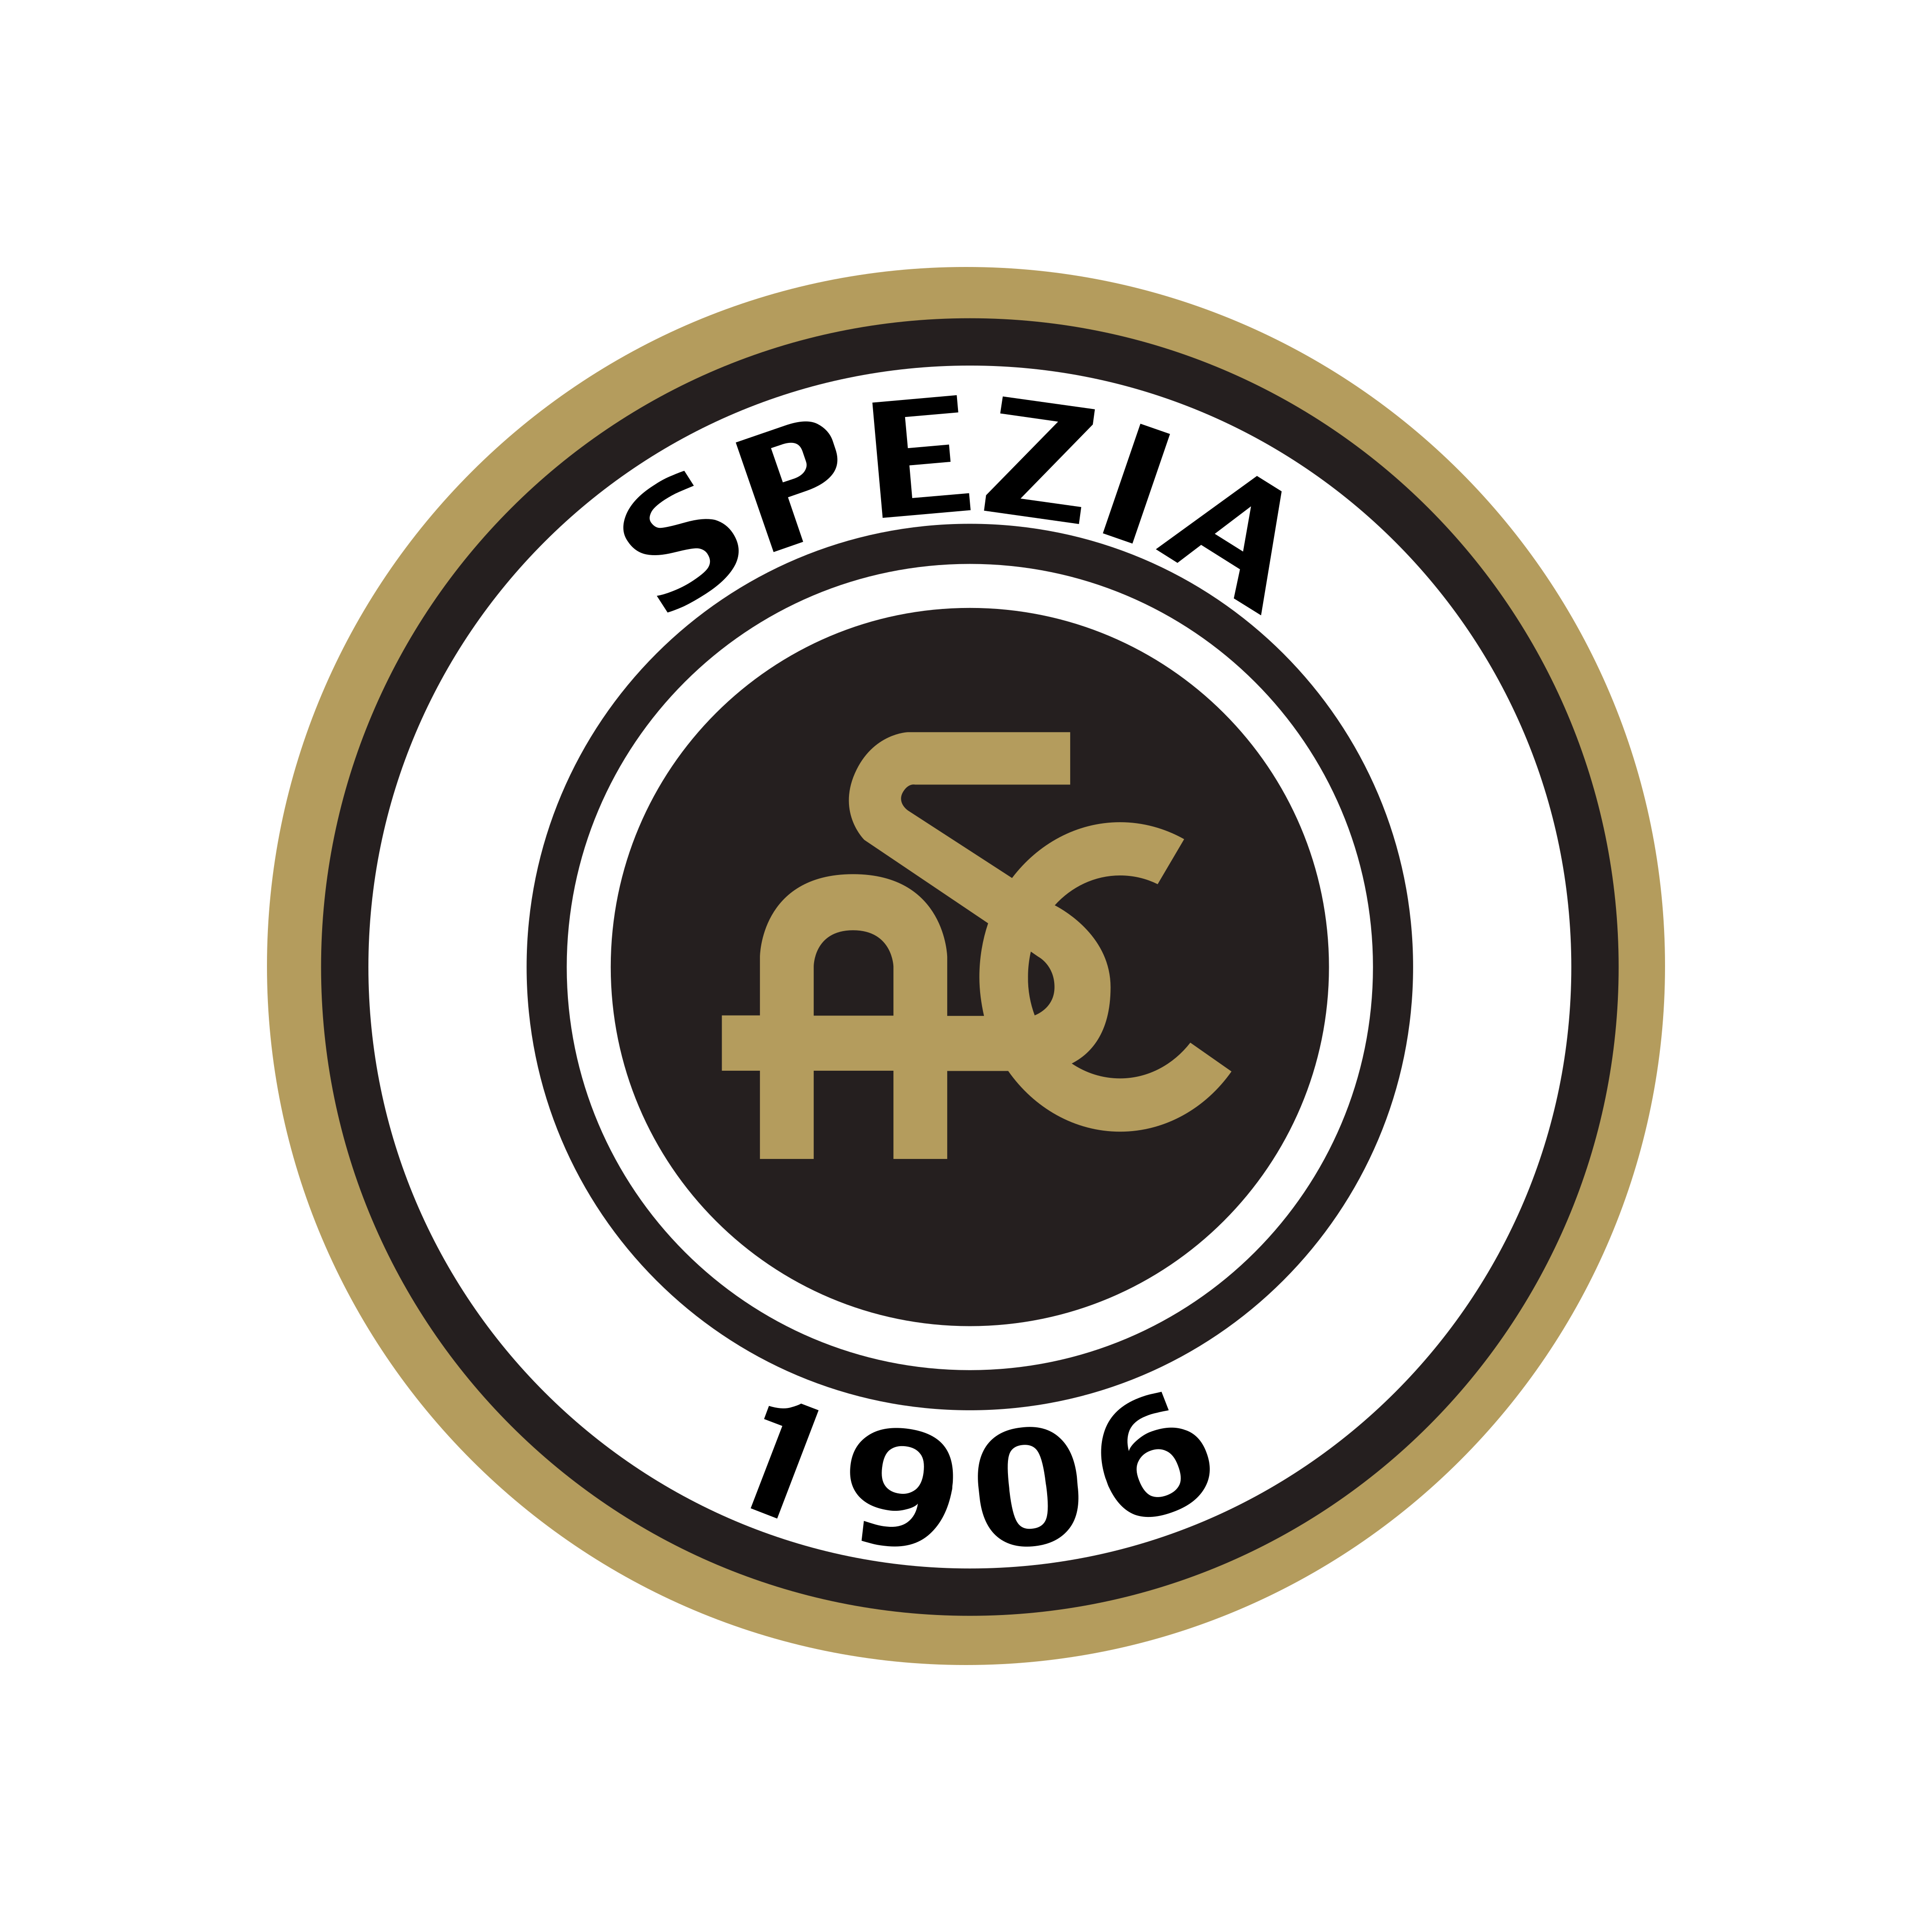 ac spezia logo 0 - AC Spezia Logo